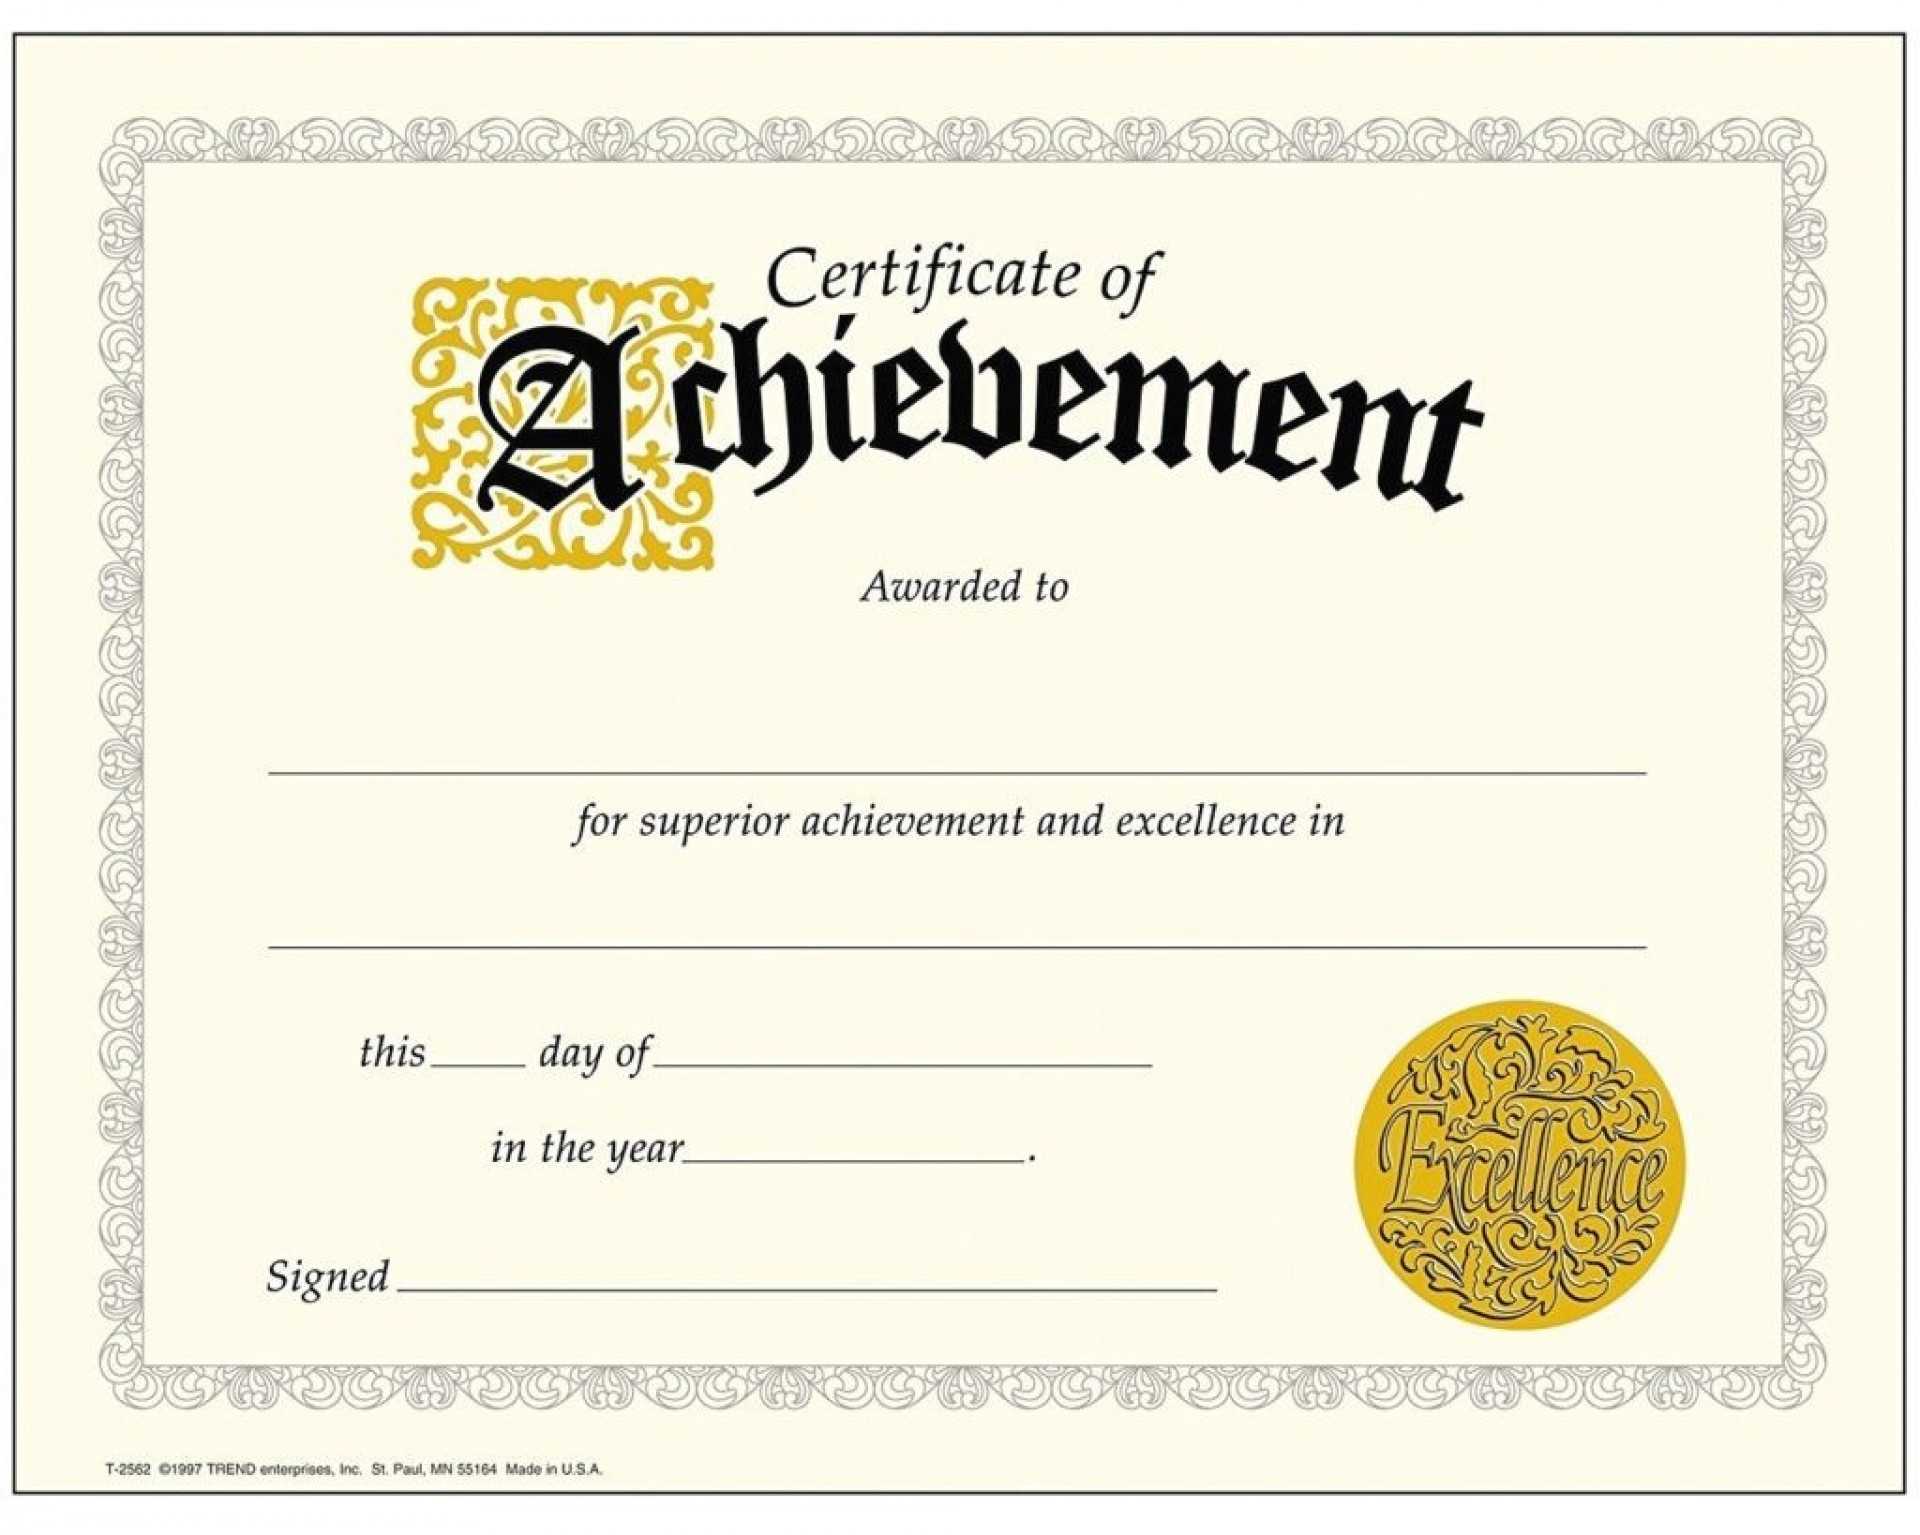 004 Certificate Of Achievement Template Ideas Phenomenal Regarding Certificate Of Accomplishment Template Free